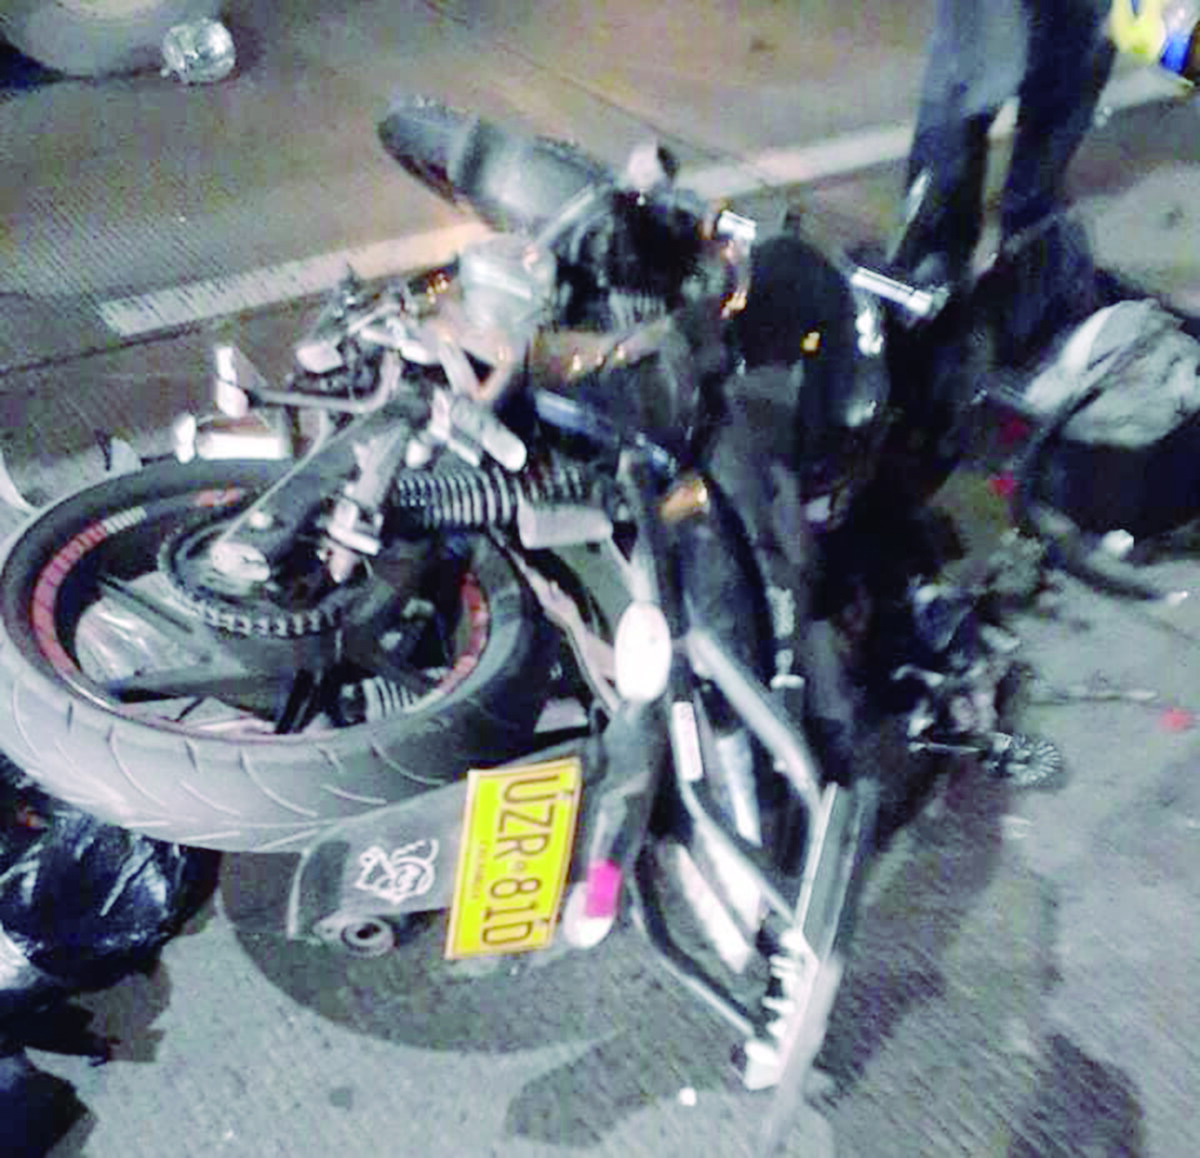 Fatal accidente de motociclista en la NQS El accidente ocurrió sobre la NQS, a la altura de la calle 19.